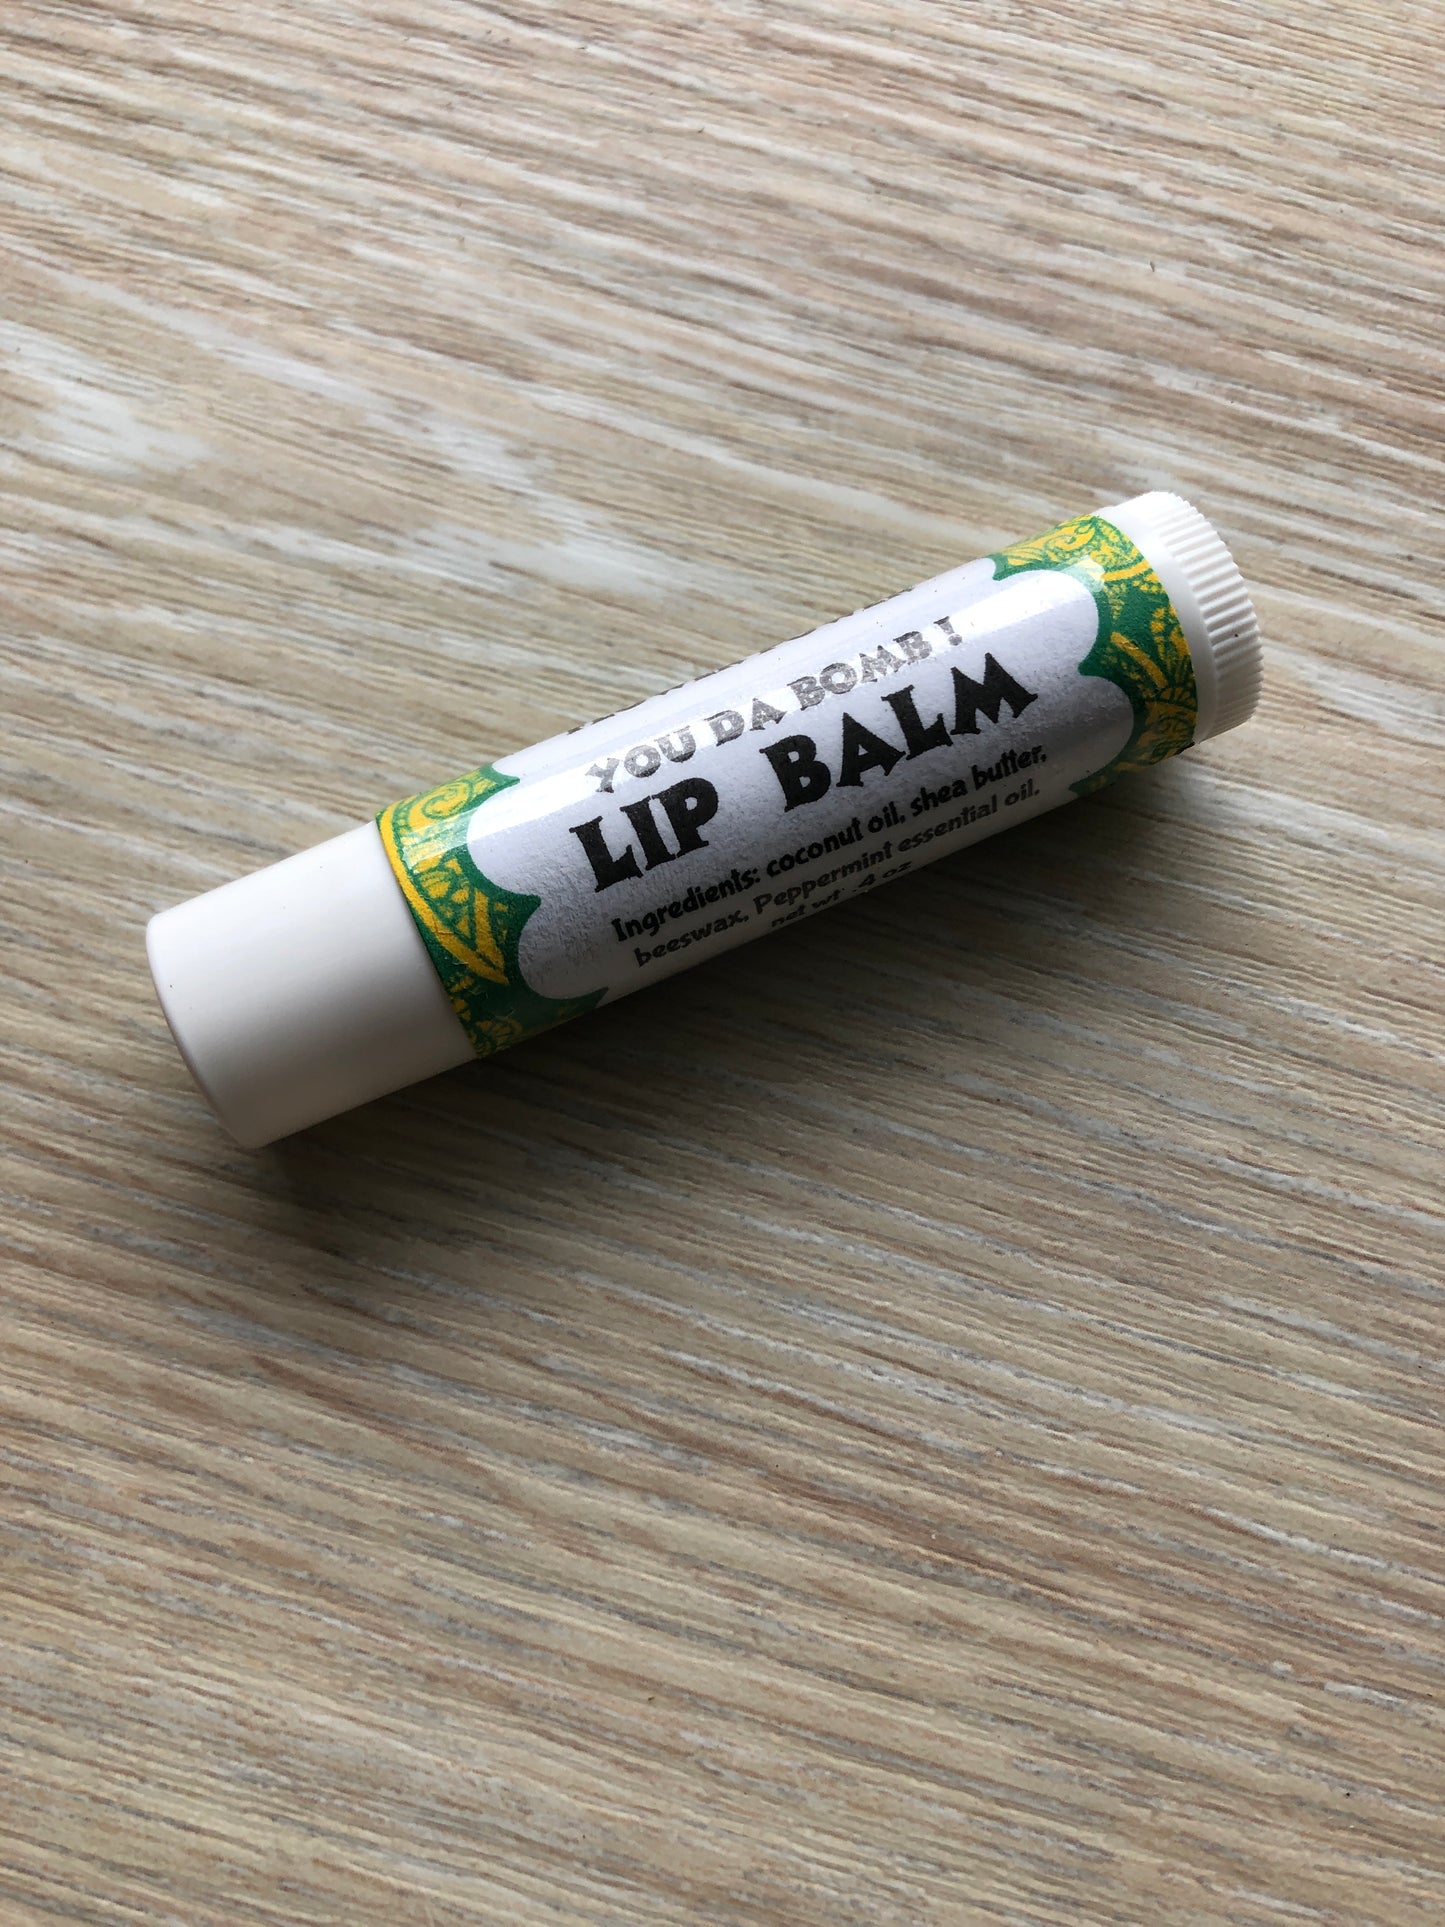 PDX Flower Power lip Balm, You da bomb Lip Balm